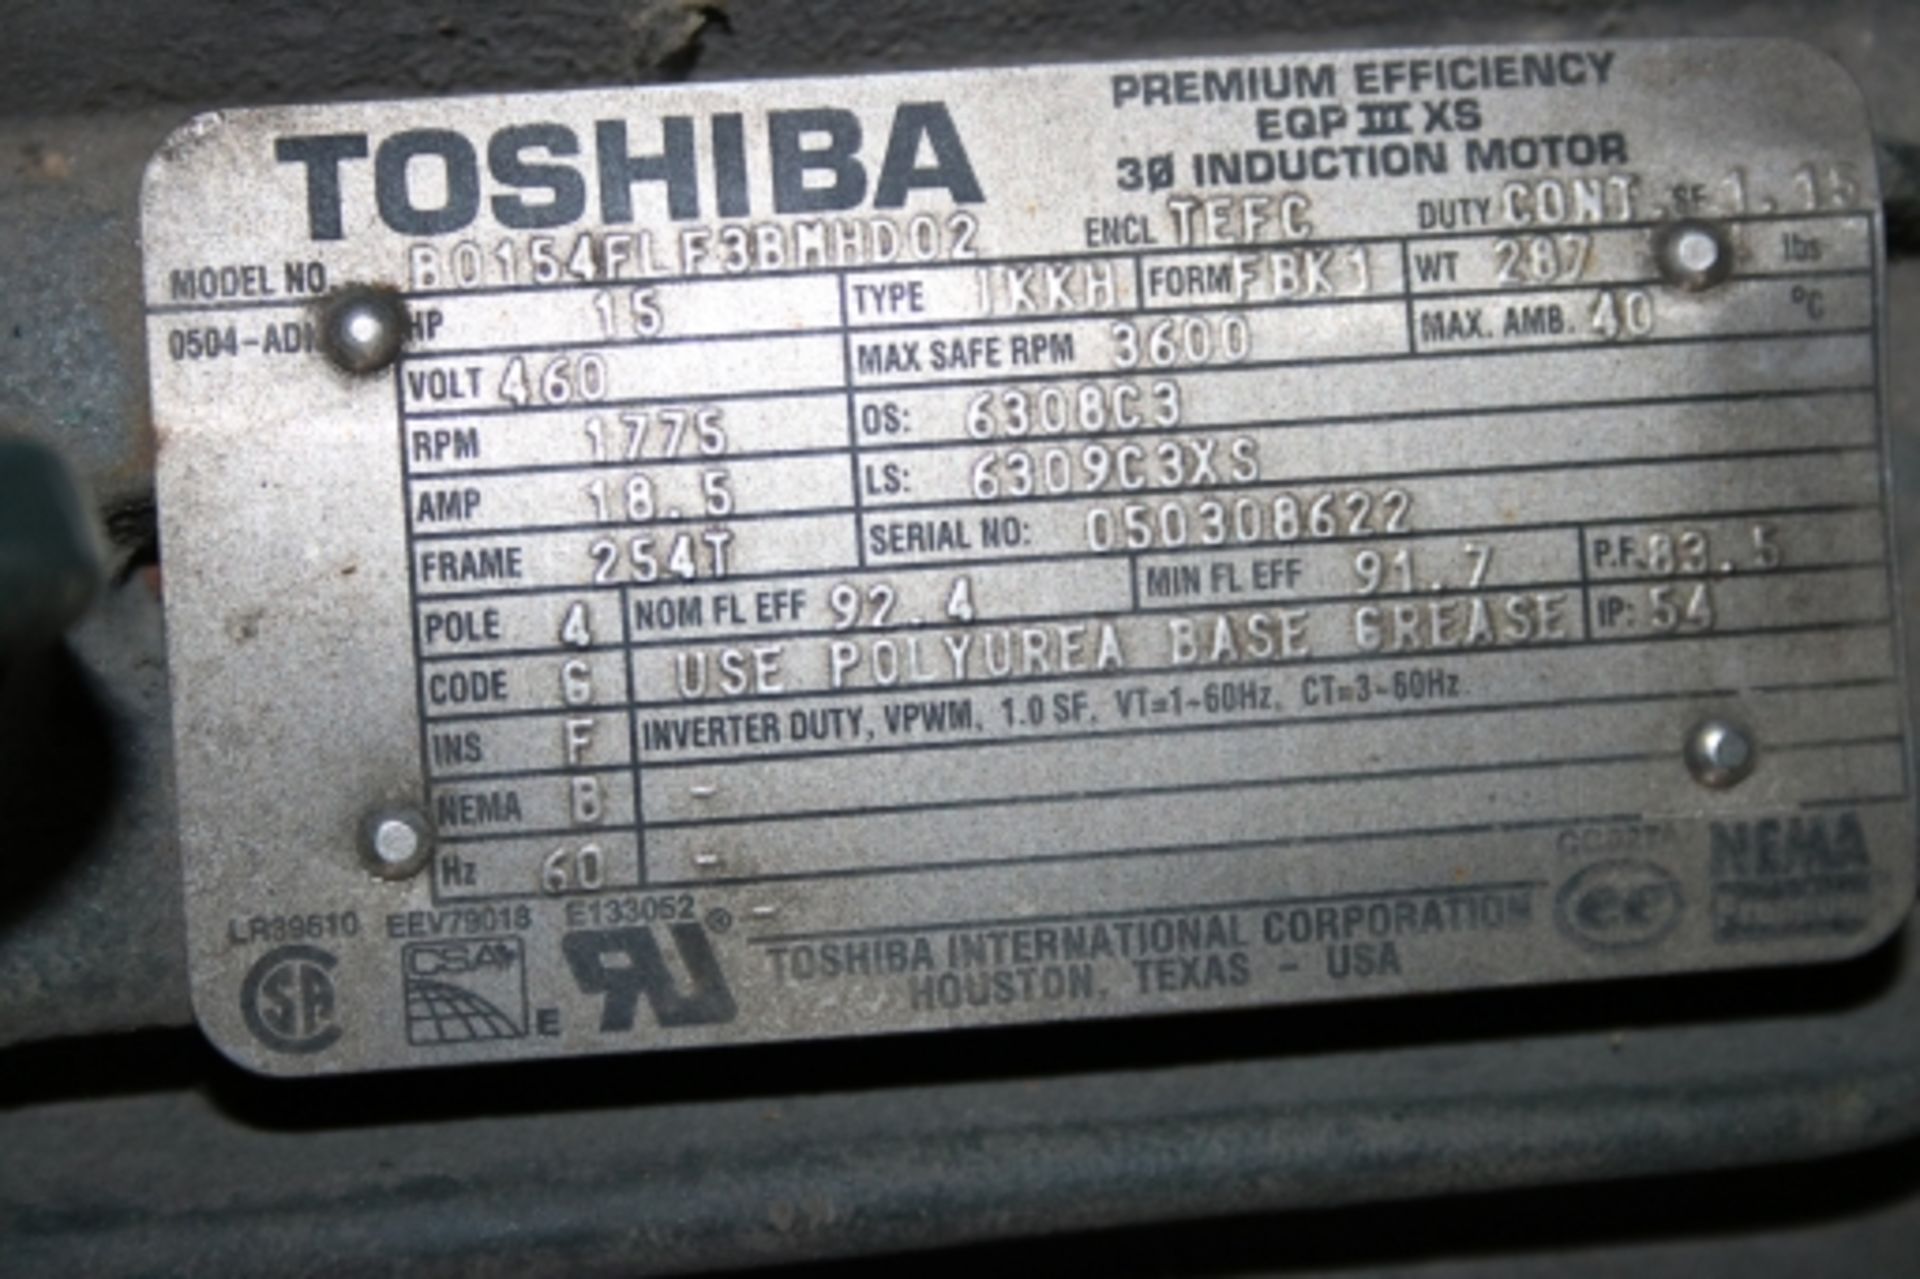 Toshiba EQP III XS 15hp, 3600 RPM Motor - Image 5 of 7